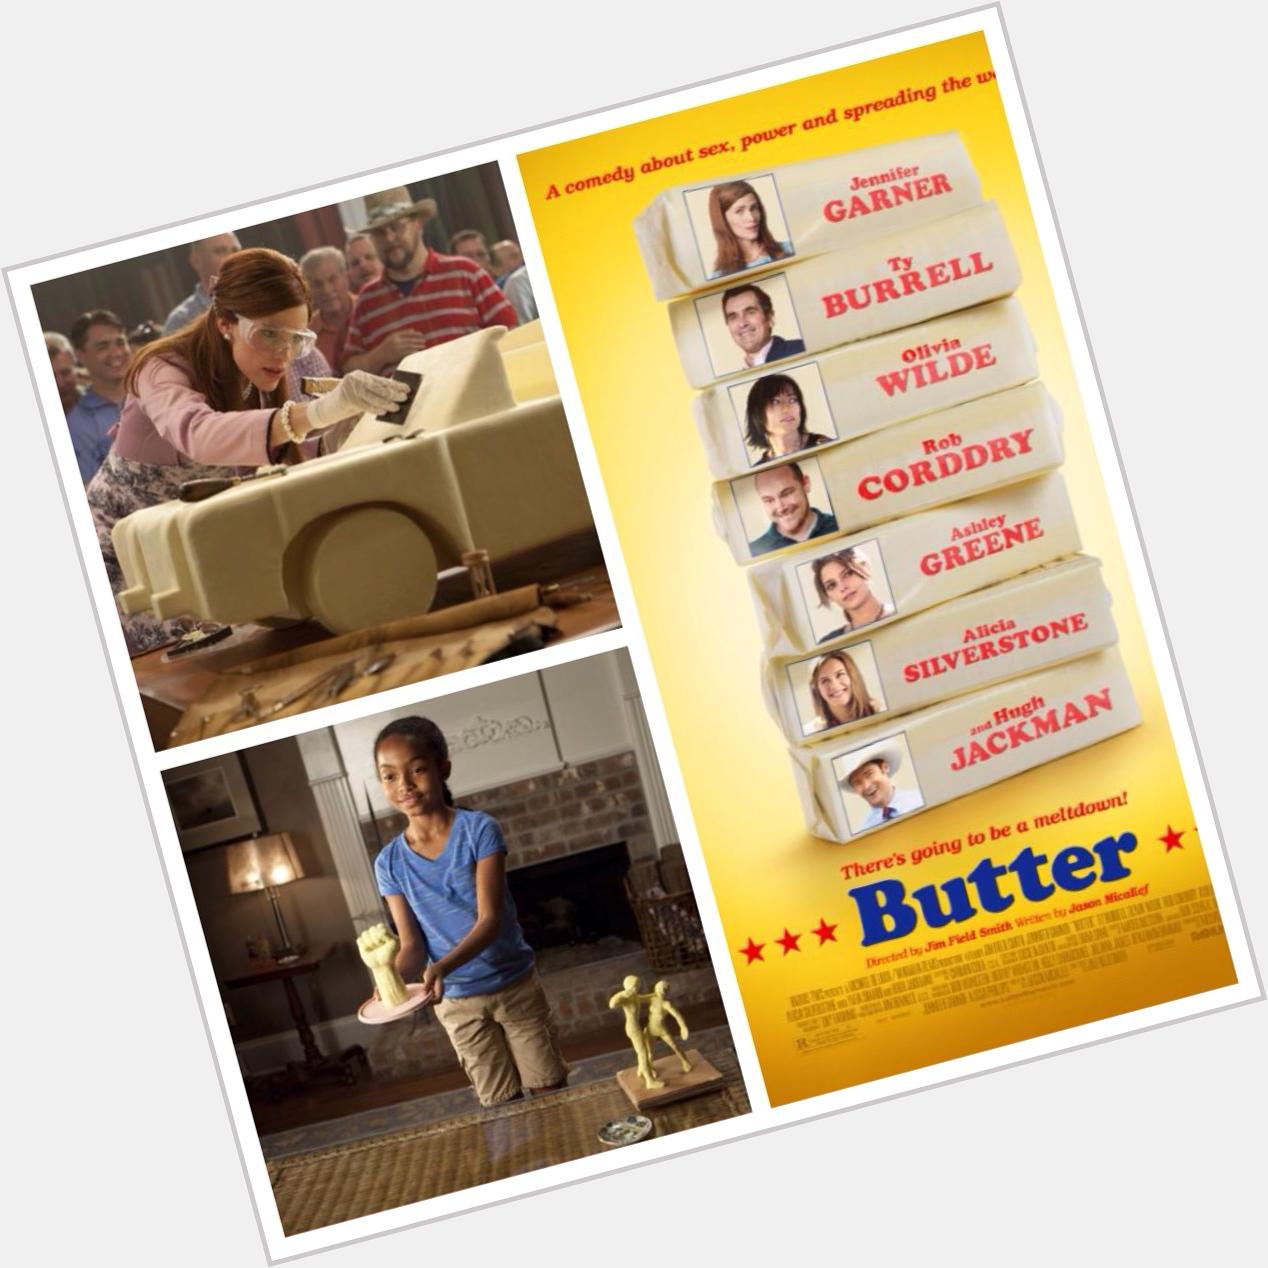 Happy Birthday Jennifer Garner! Butter rocked to us!  Photos by STEVE DIETL via  